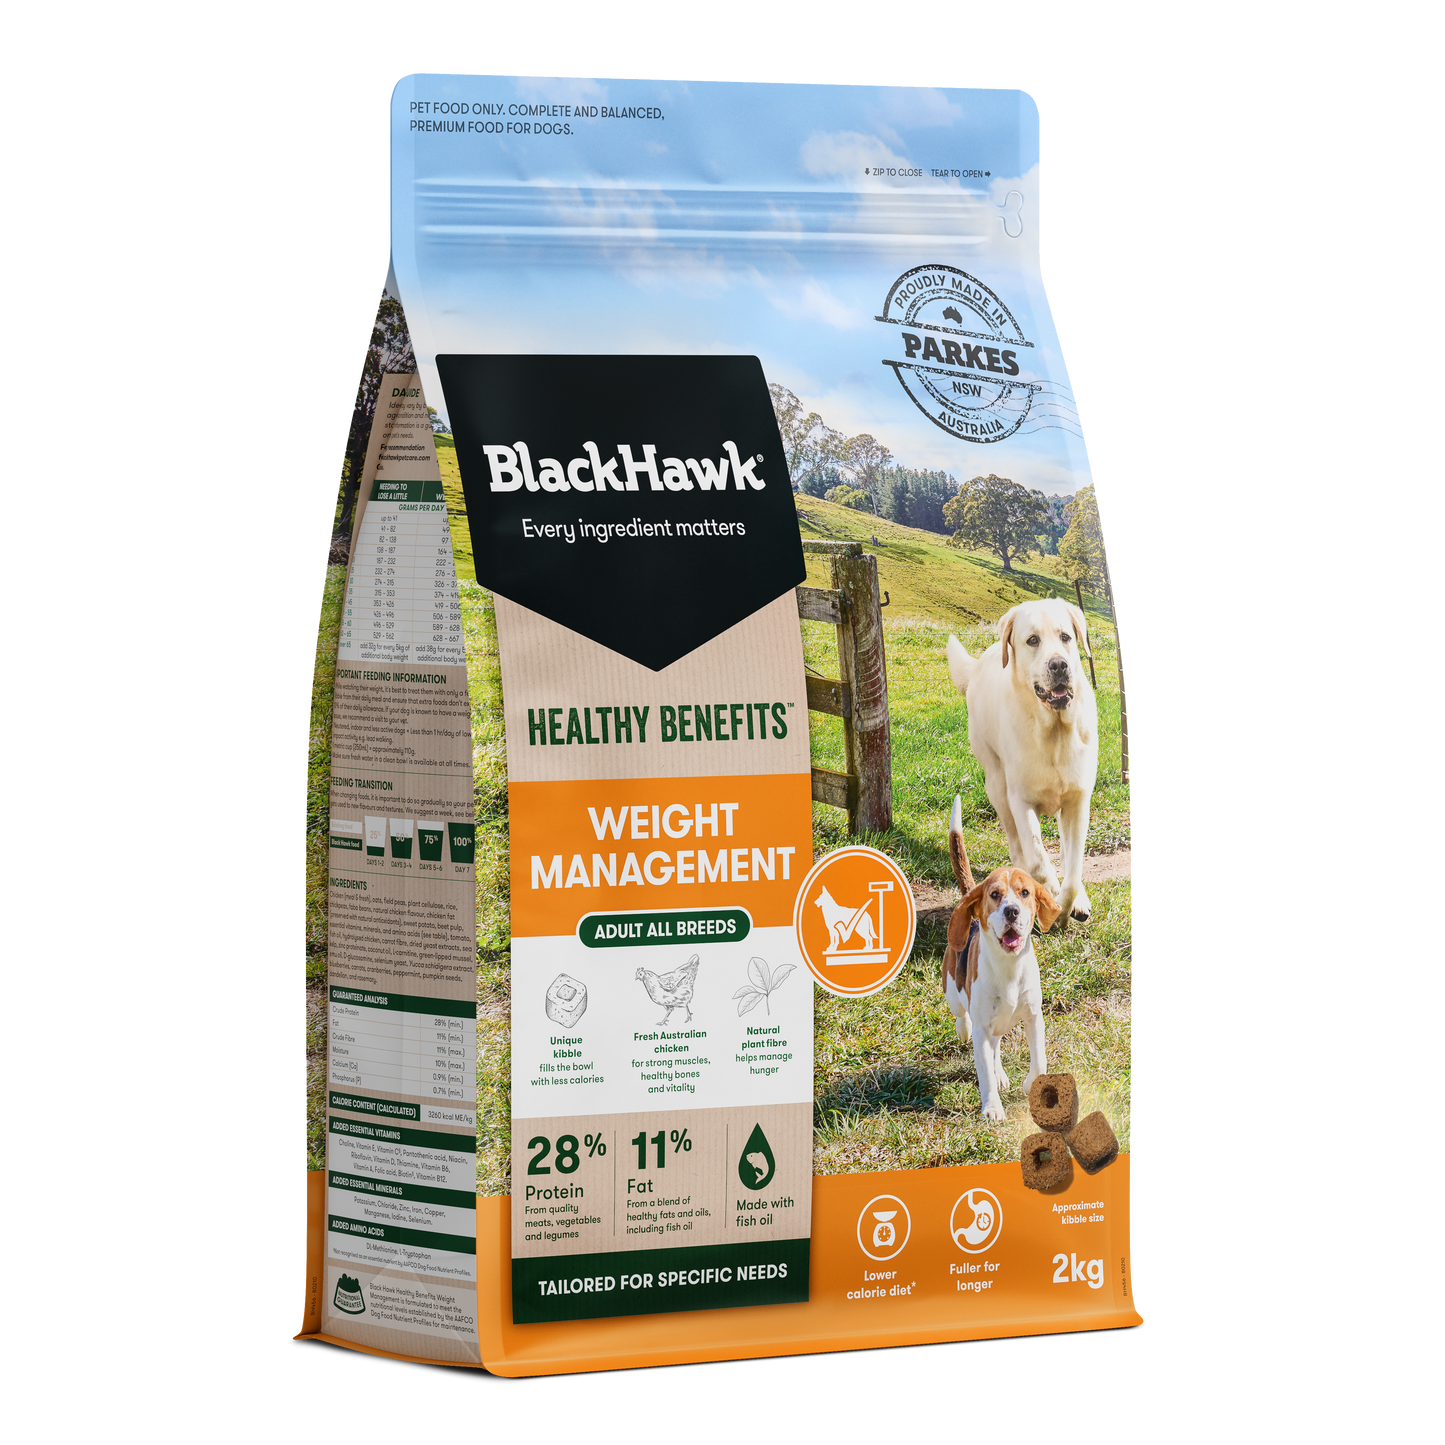 Black Hawk Healthy Benefits Weight Management Dog Food